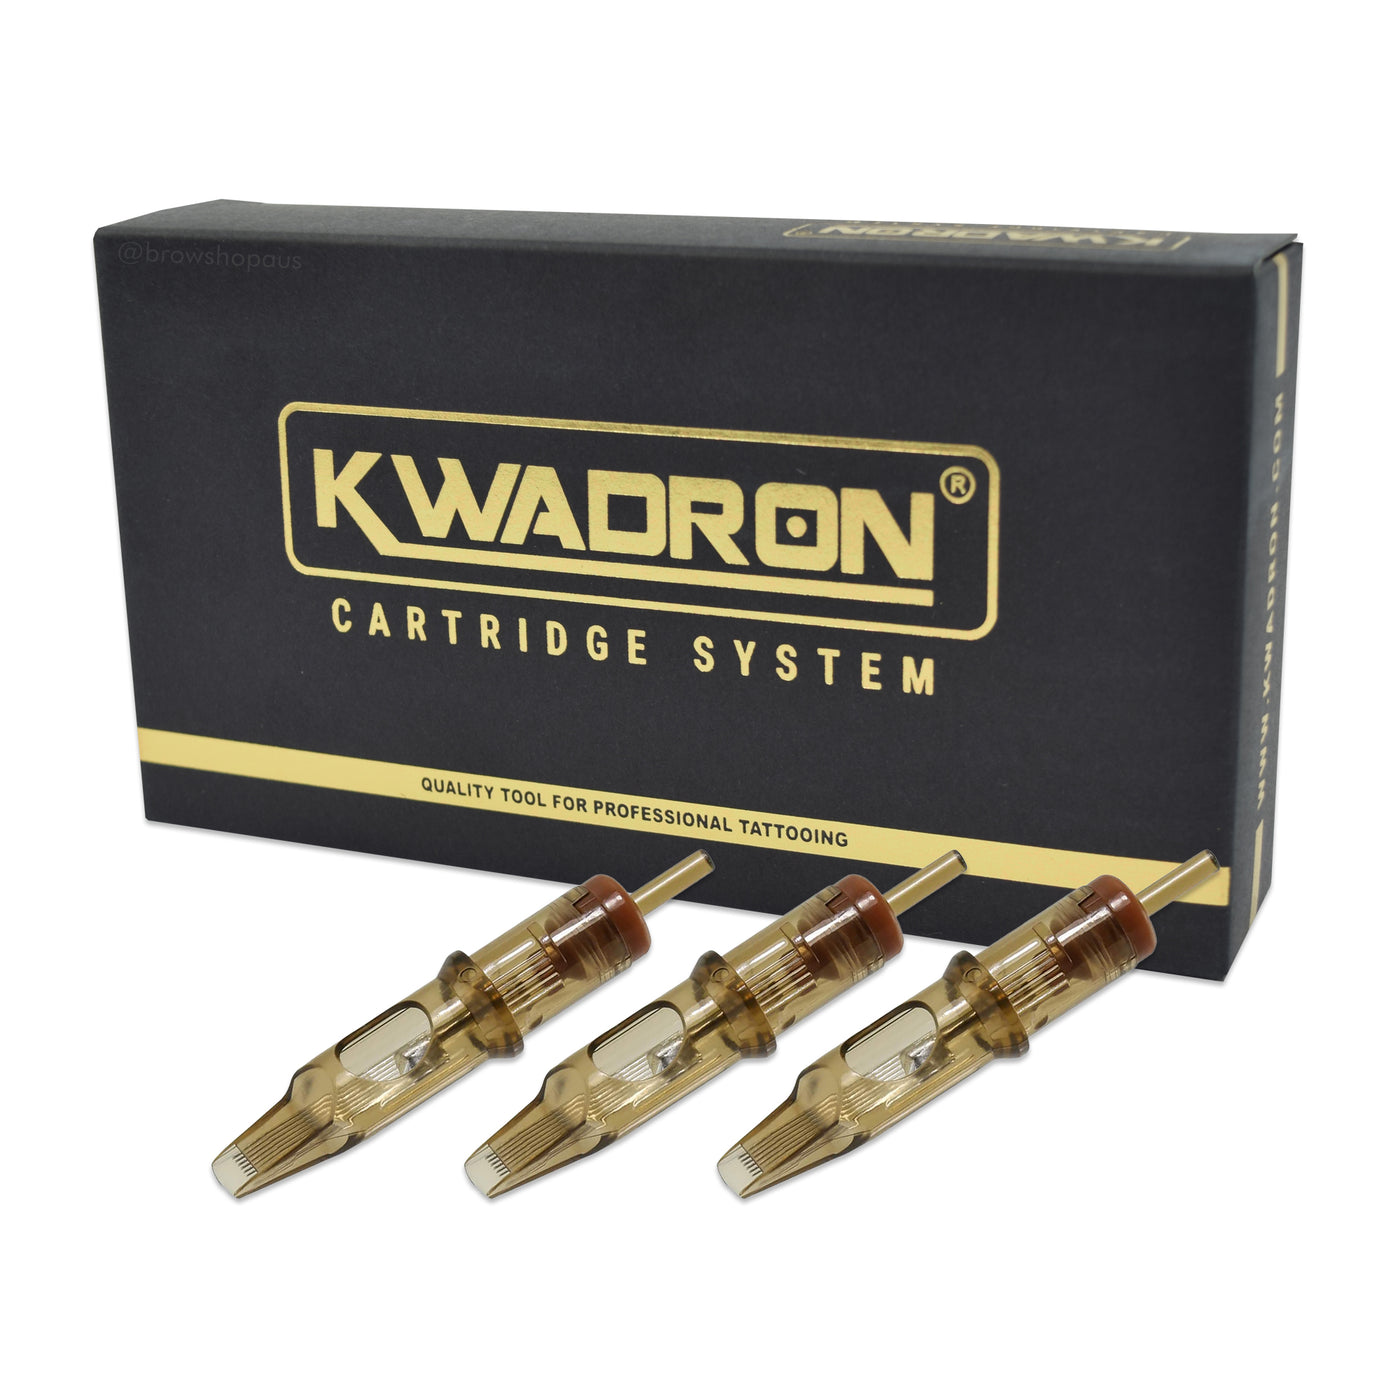 Kwadron Cartridges - 20 pcs